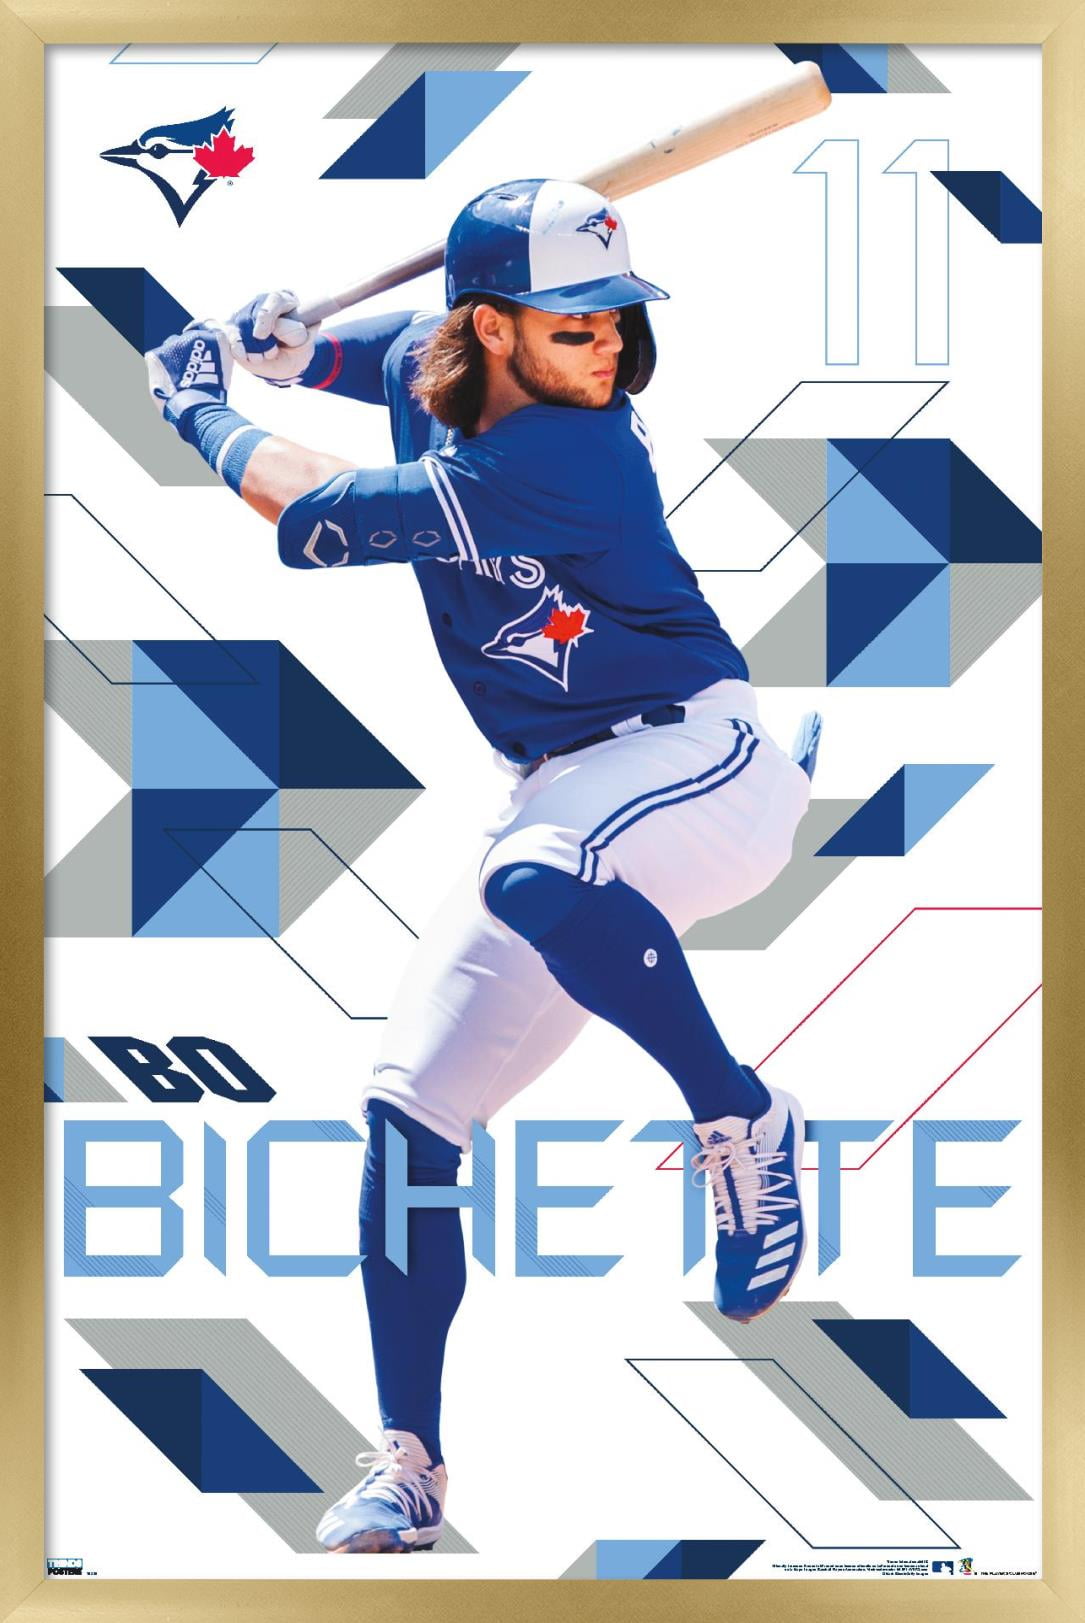 MLB Toronto Blue Jays - Bo Bichette Wall Poster, 14.725 x 22.375